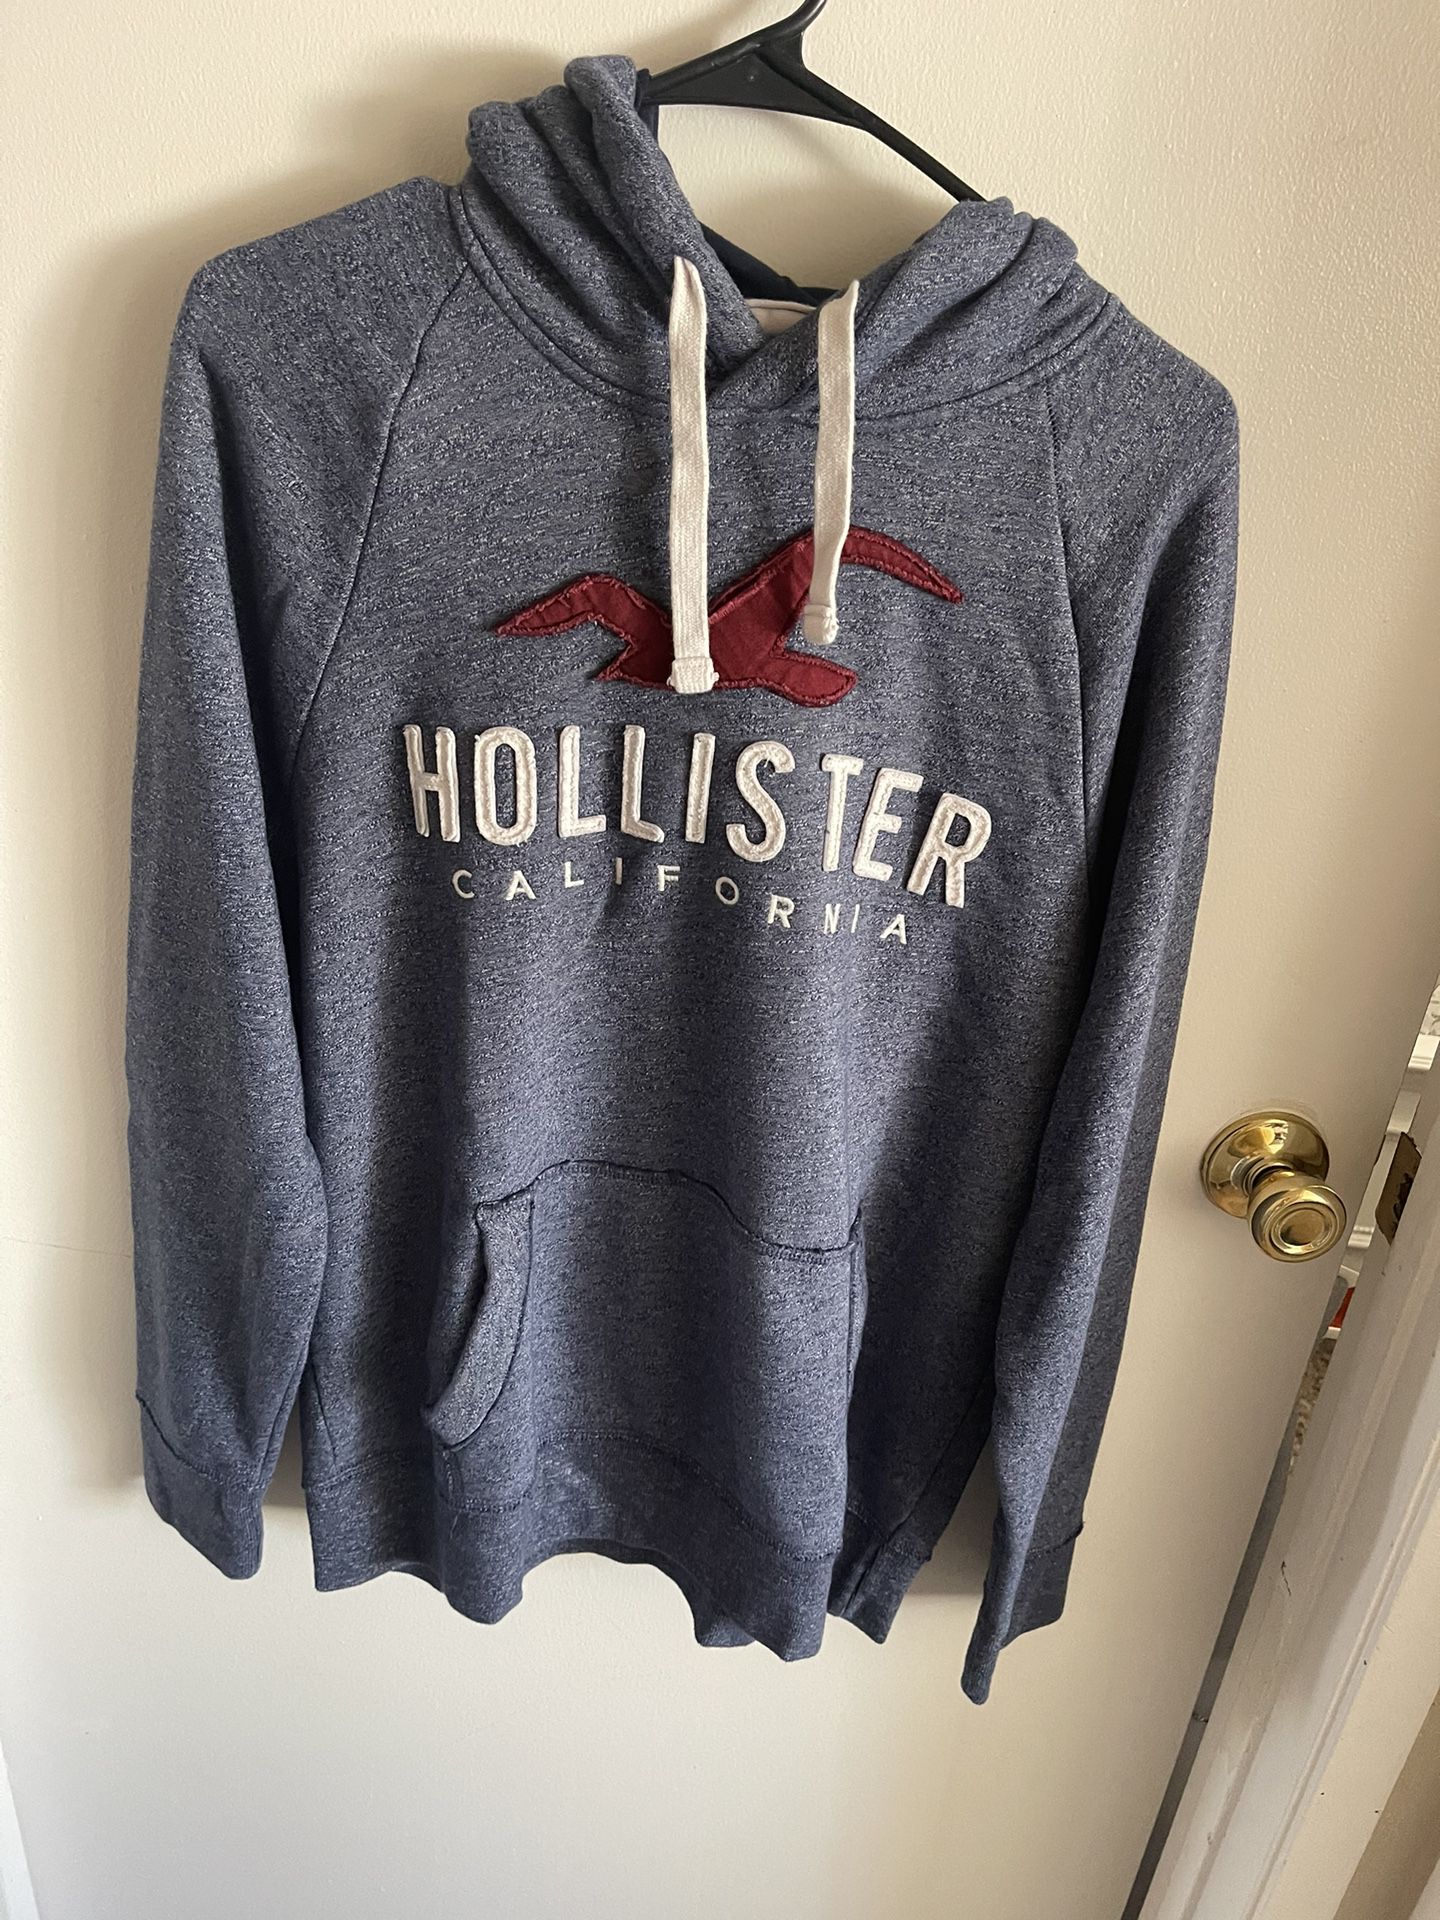 Hollister Hoodies And Shirts 